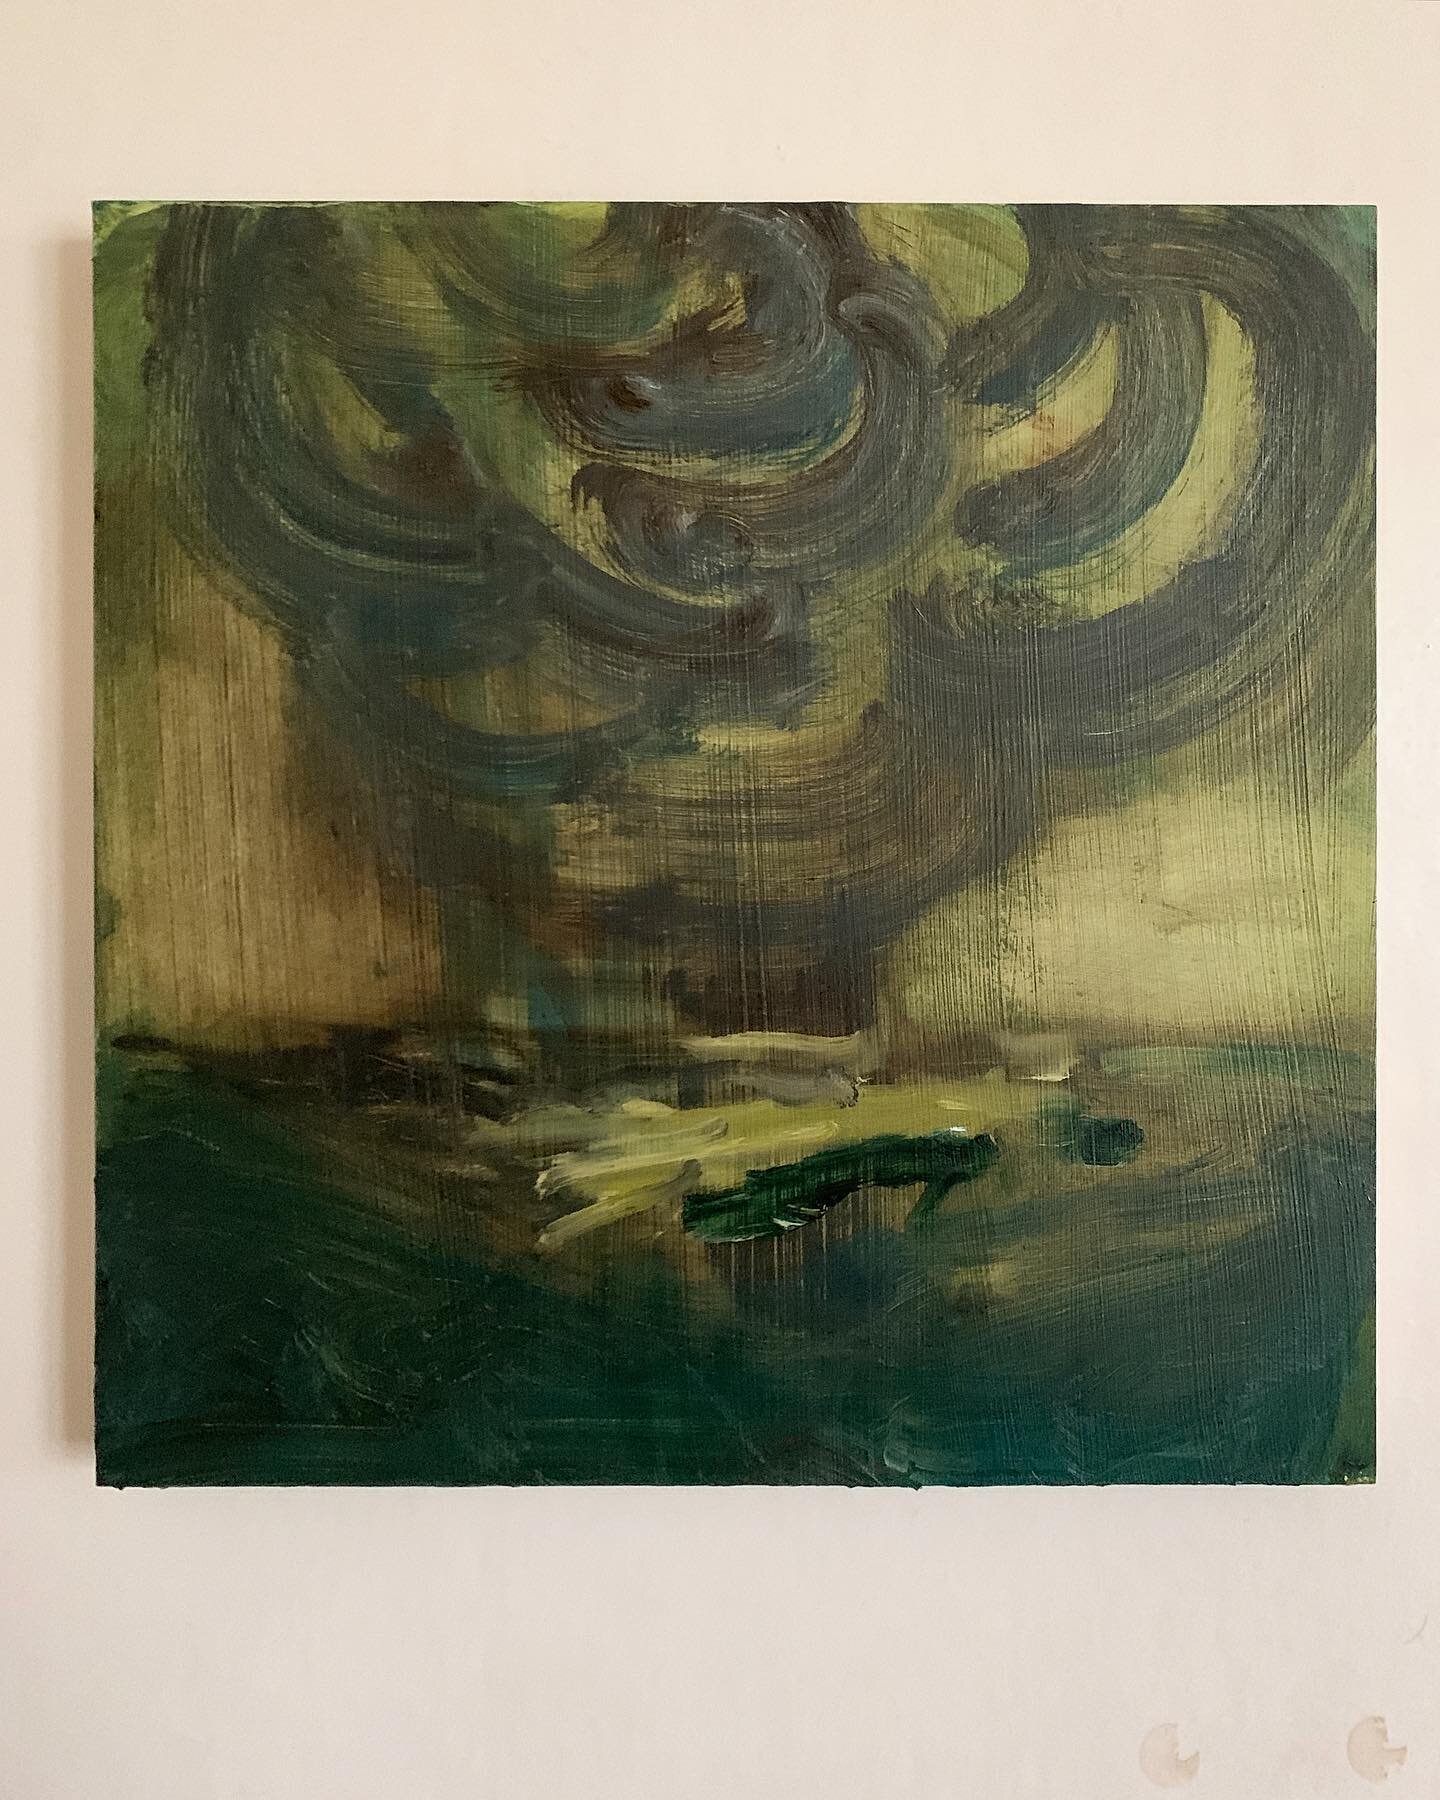 &quot;Swirling Clouds, Camber Castle&quot; Oil on wooden panel, 30x30cm #vinerart #painting #art #expressive #landscape #oilpainting